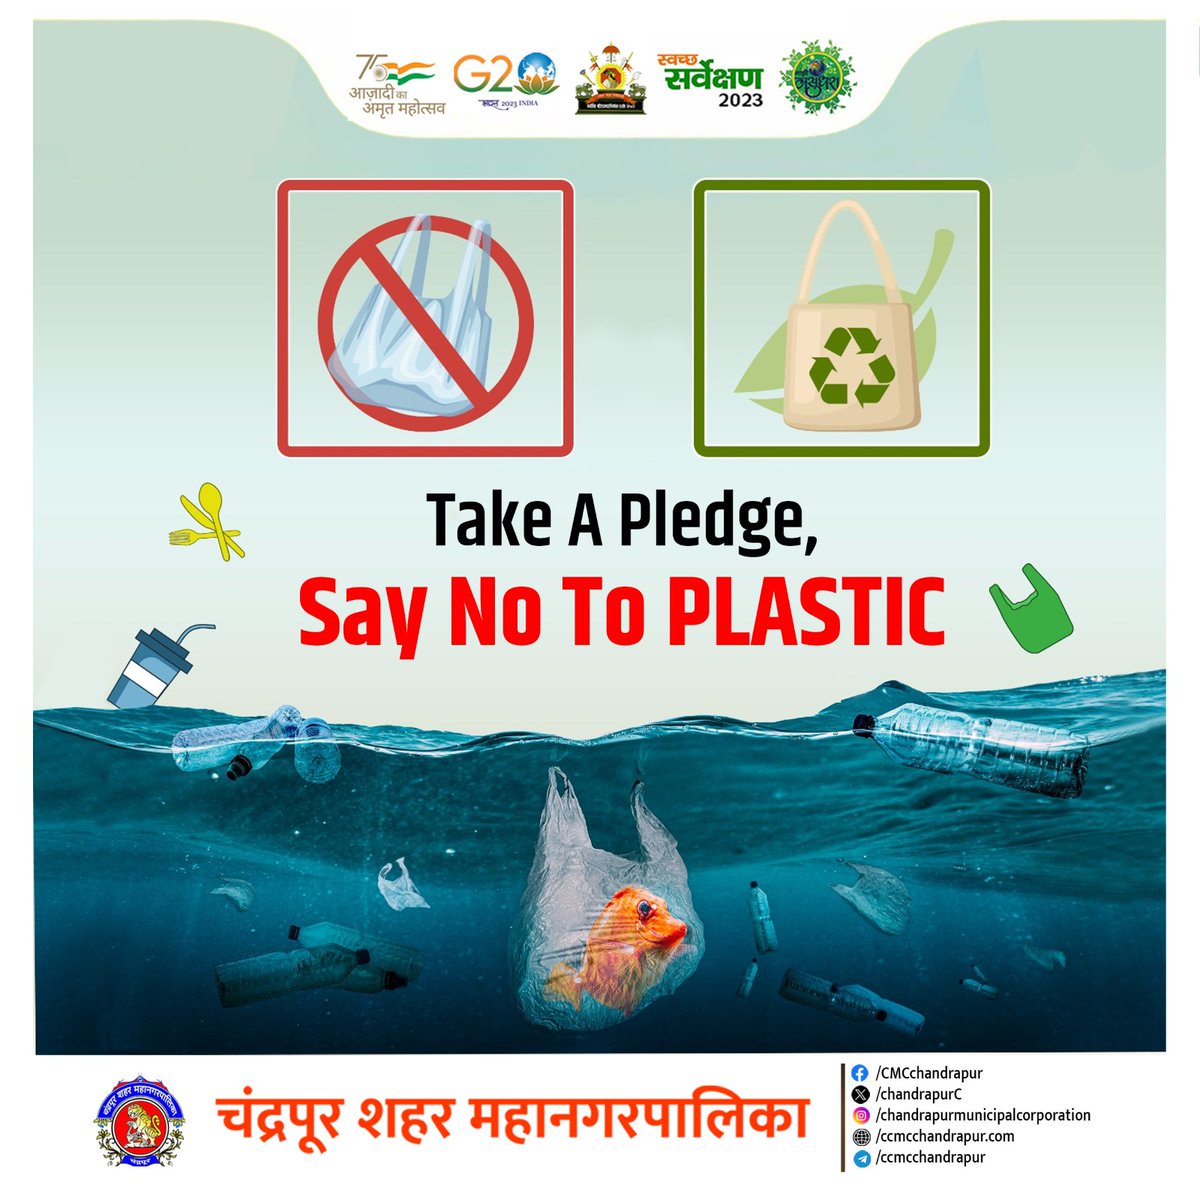 Take A Pledge, Say No To PLASTIC
#Conservation #nature #SwachhSurvekshan2023 #ZeroWaste #plasticban #chandrapurcity #SwachhataKeDoRang #MyCityMyPride #Plasticfreecity #GoGreen #YehMeraSheharHai #IndiavsGarbage #MissionLiFE #ChooseLiFE #environment #climatechange #gogreen